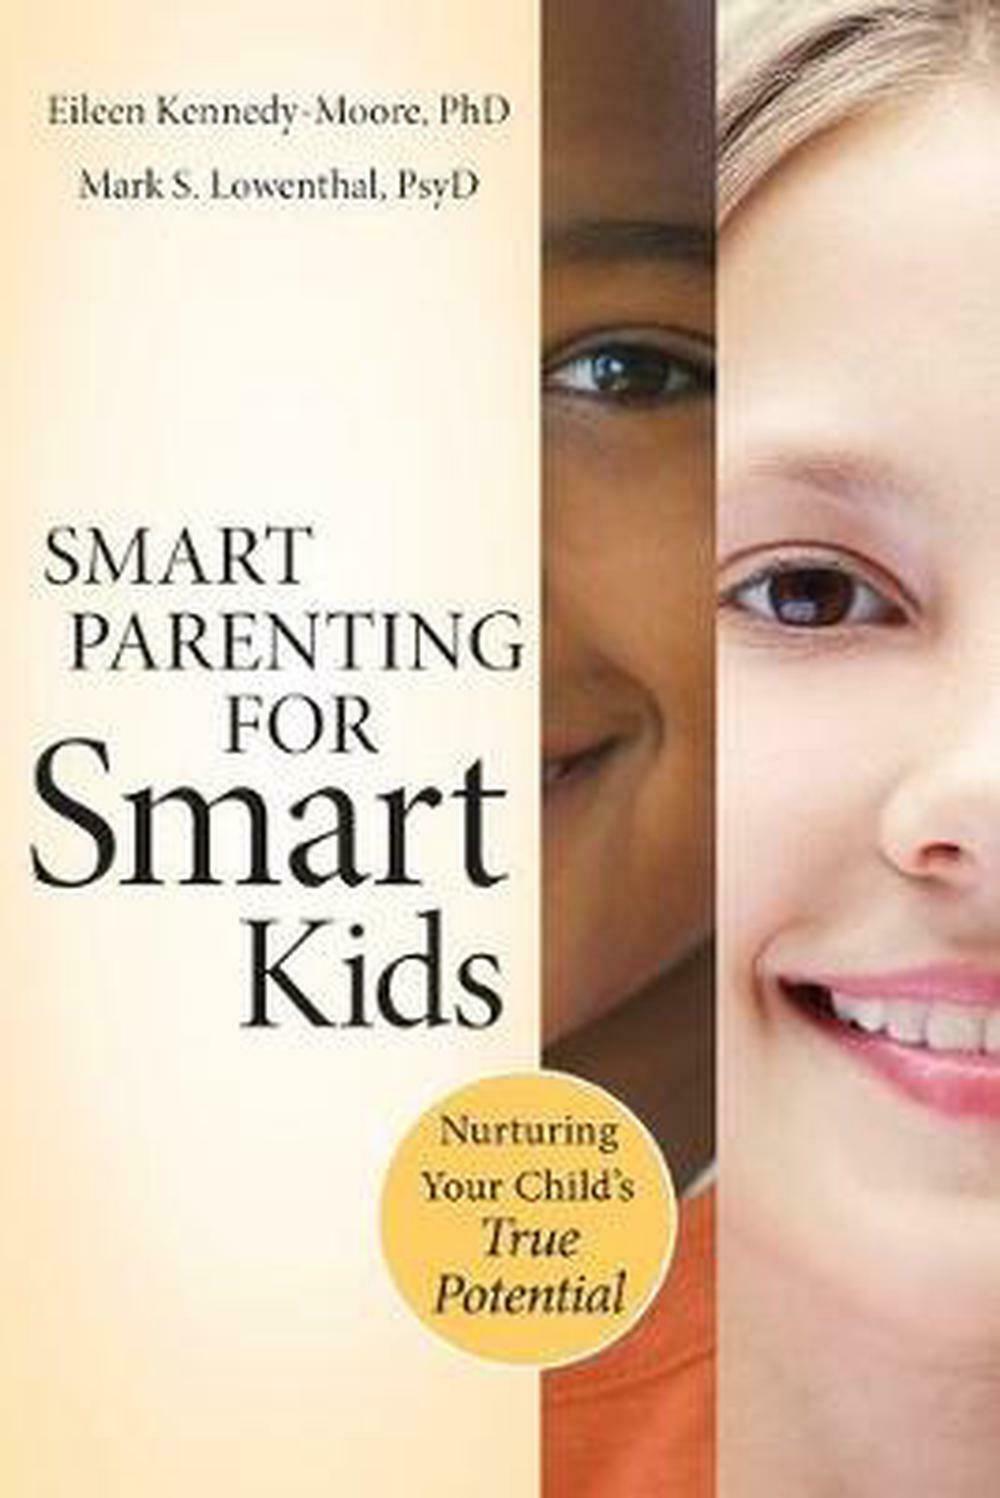 Smart Parenting for Smart Kids: Nurturing Your Child's True Potential by Eileen